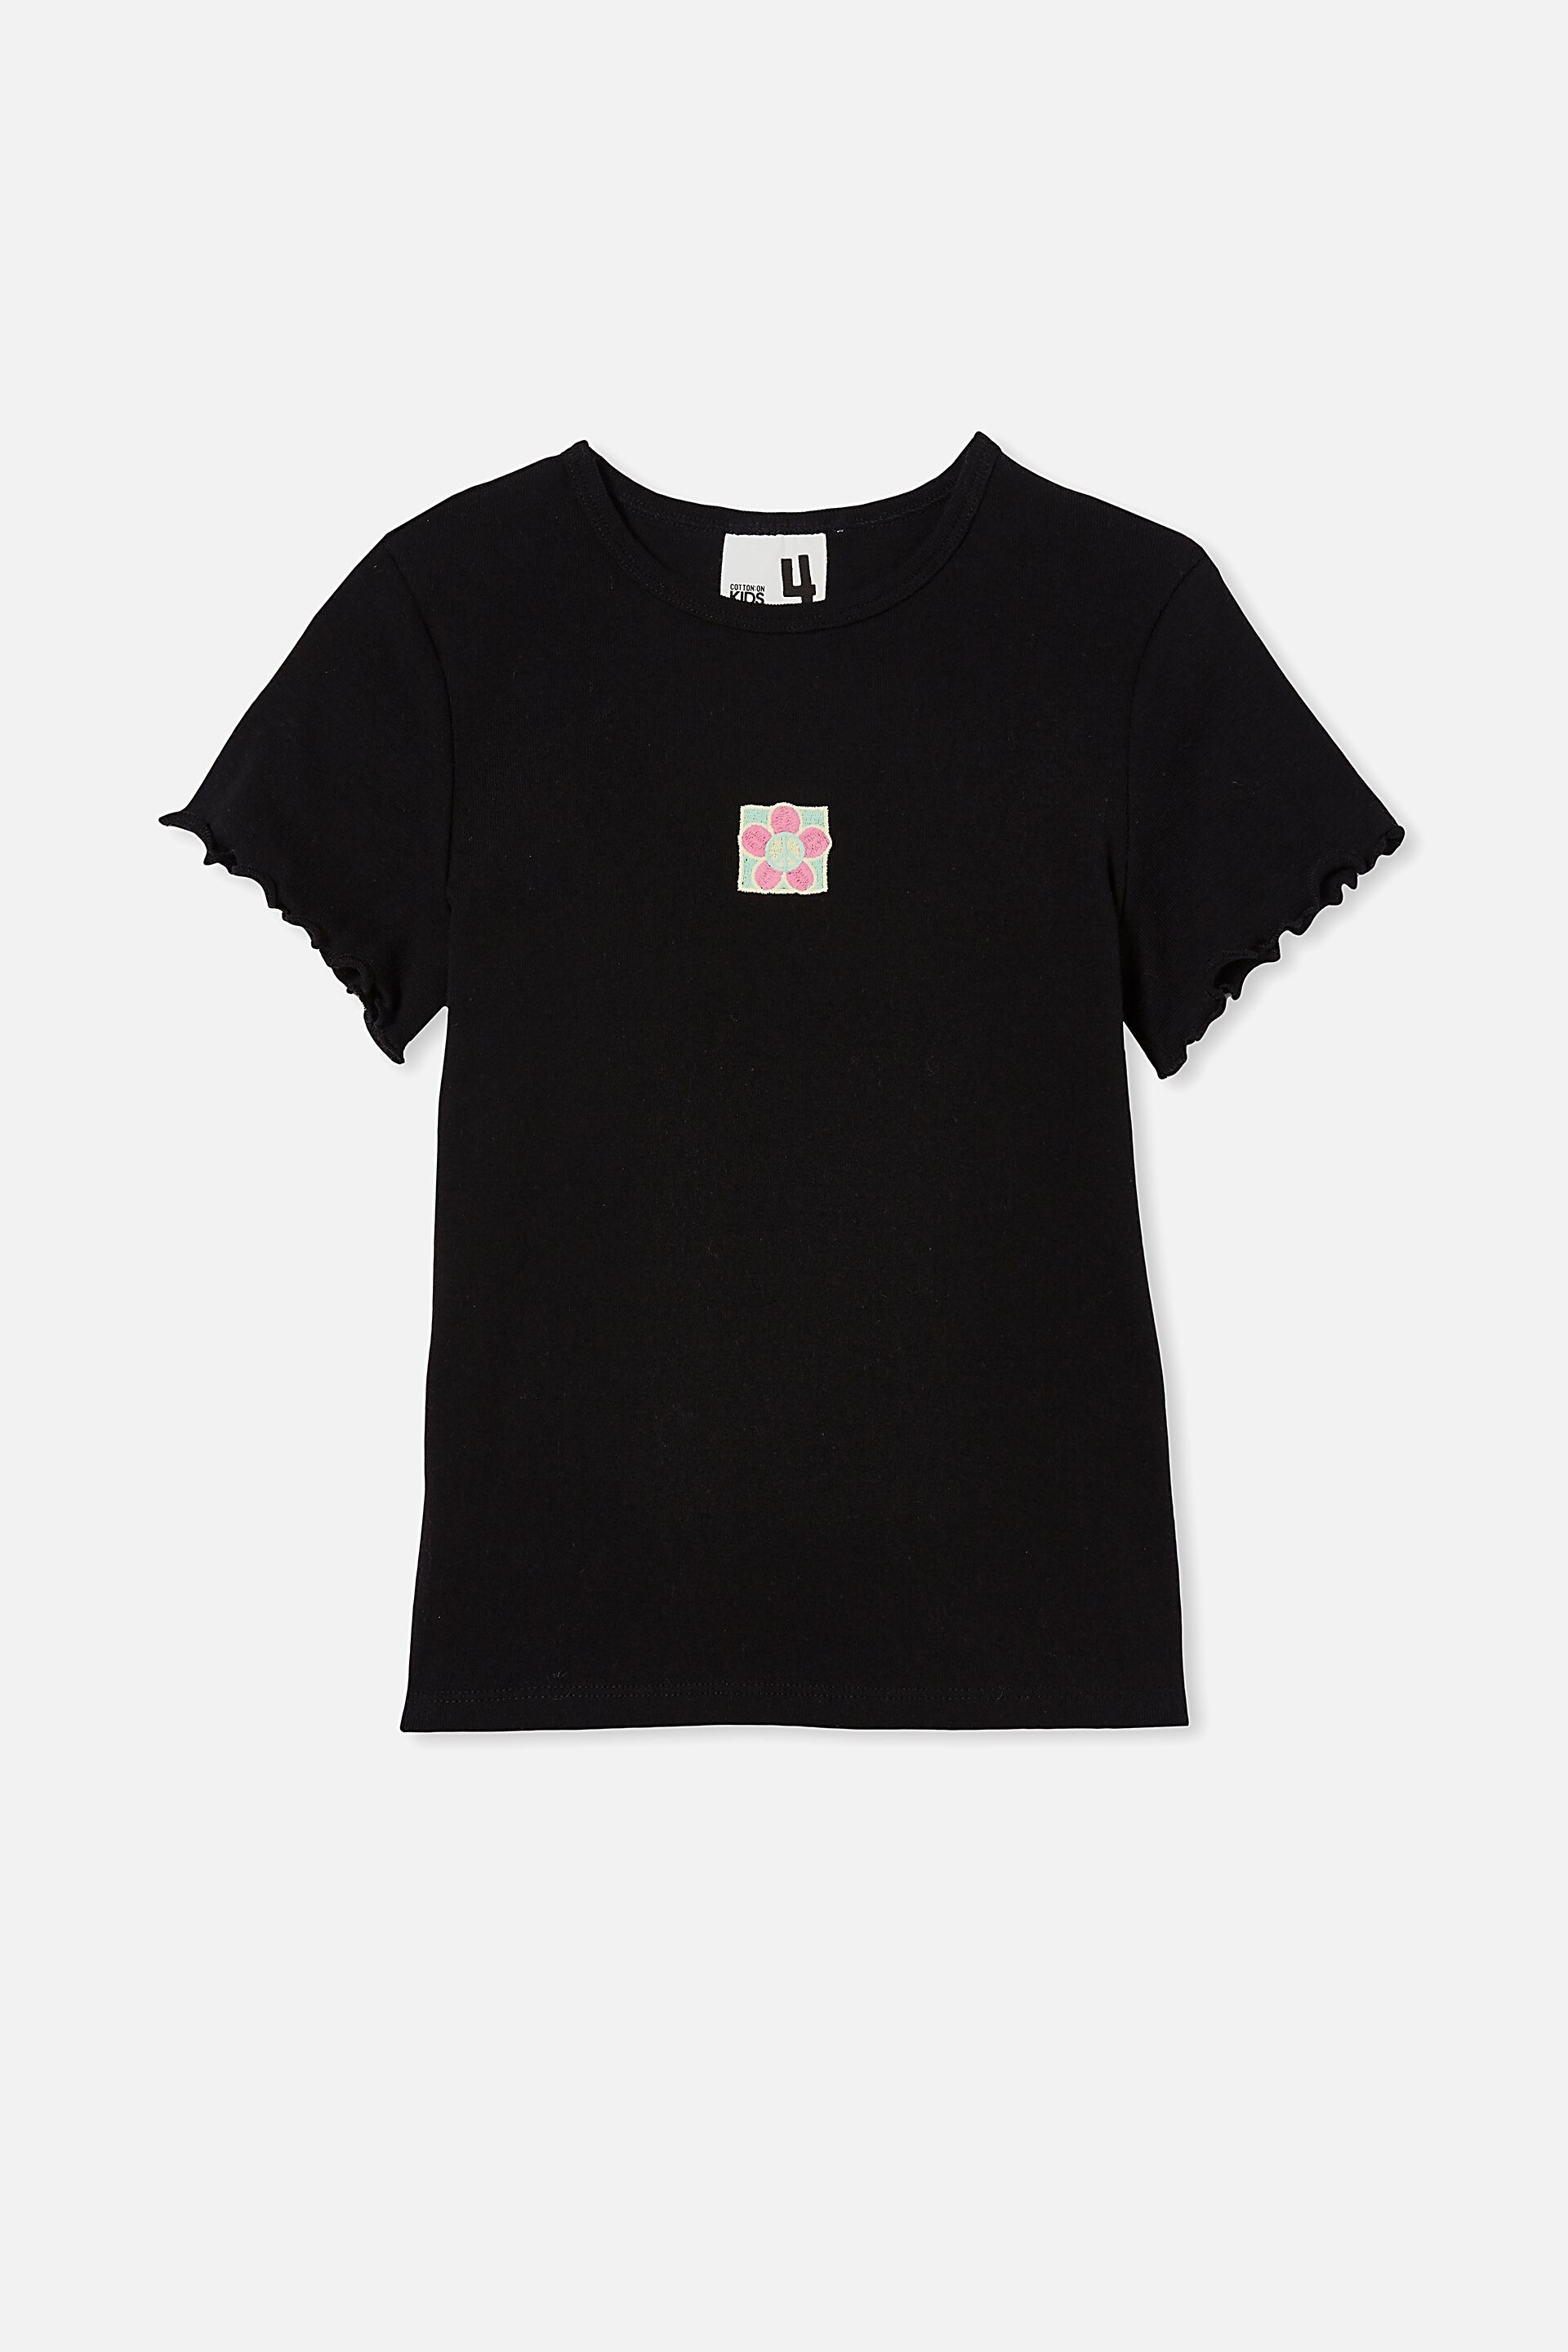 Girls 2-14 Tops & T-Shirts | Amelia Short Sleeve Top - HP37026